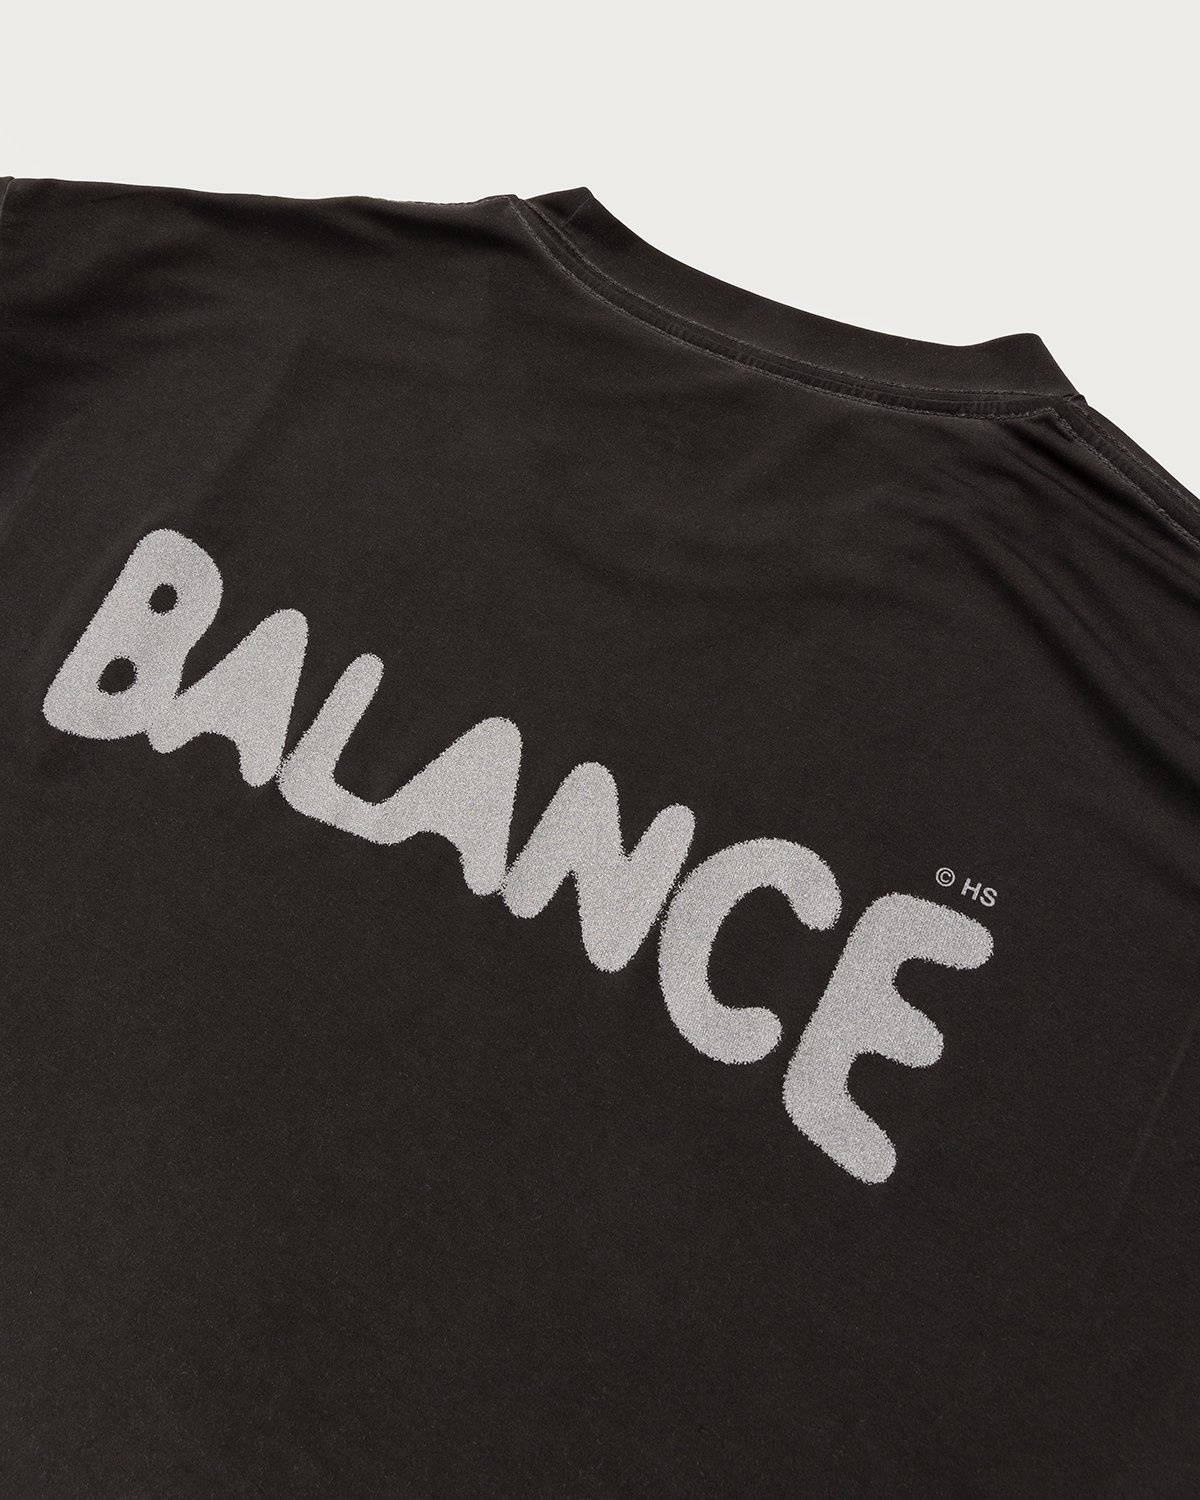 Satisfy x Highsnobiety – HS Sports Balance T-Shirt Black Pigment - T-shirts - Grey - Image 3